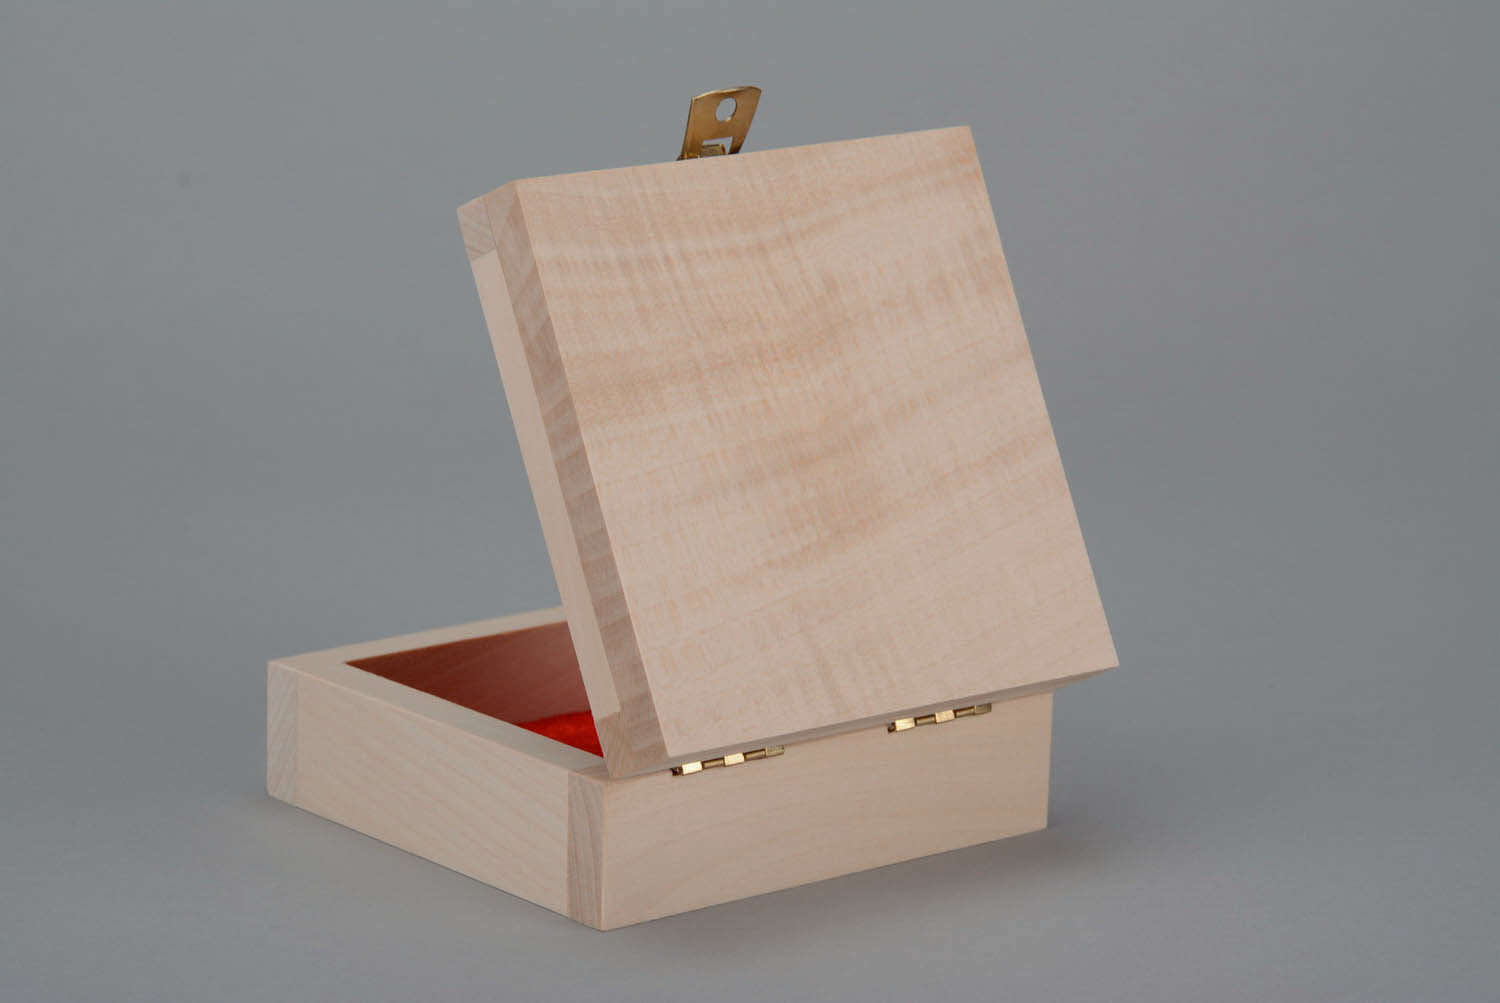 Caja de madera con acabado de terciopelo por dentro foto 3